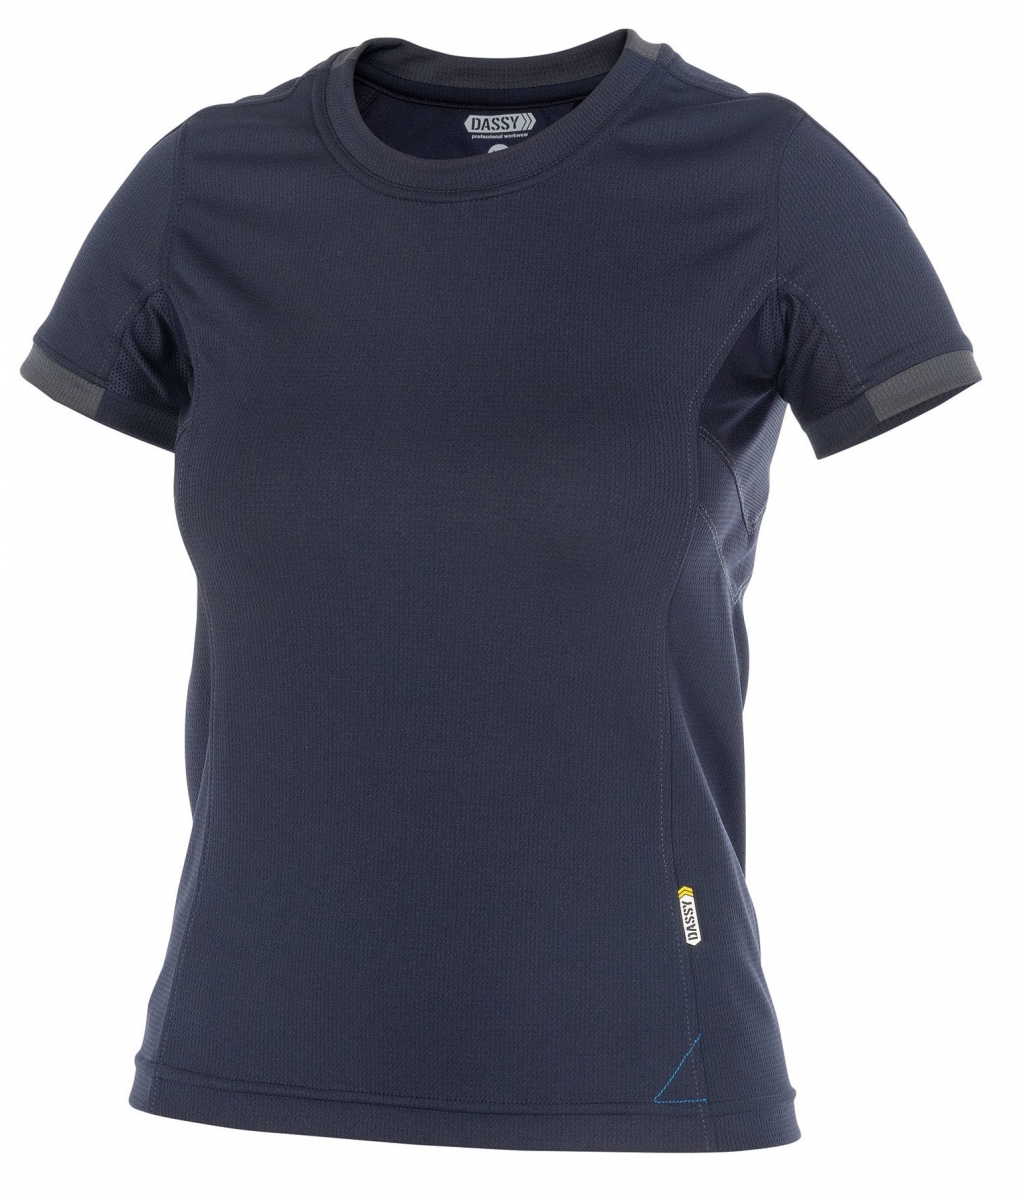 DASSY-Worker-Shirts, Damen-T-Shirt, "NEXUS", blau/grau